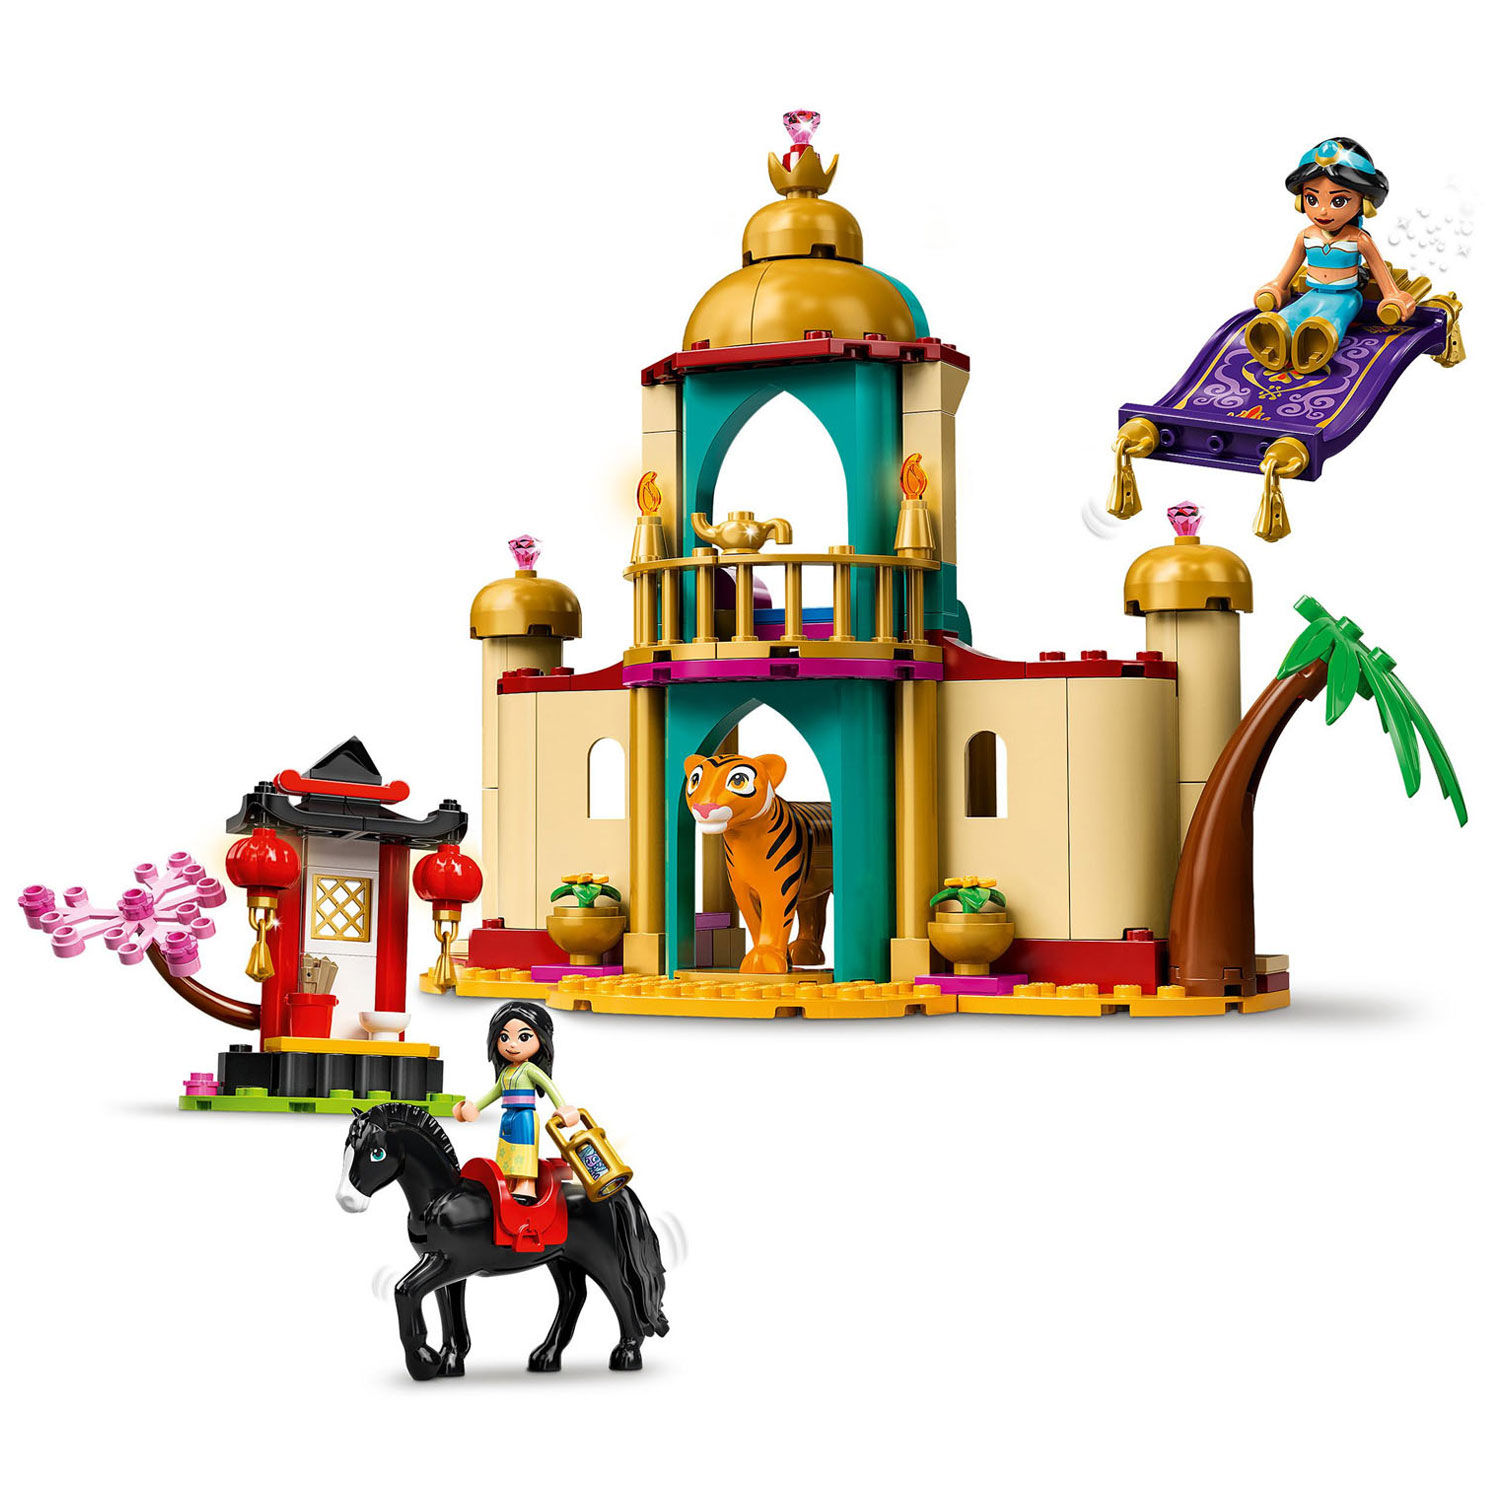 LEGO Princesse Disney 43208 Jasmine et l'aventure de Mulan